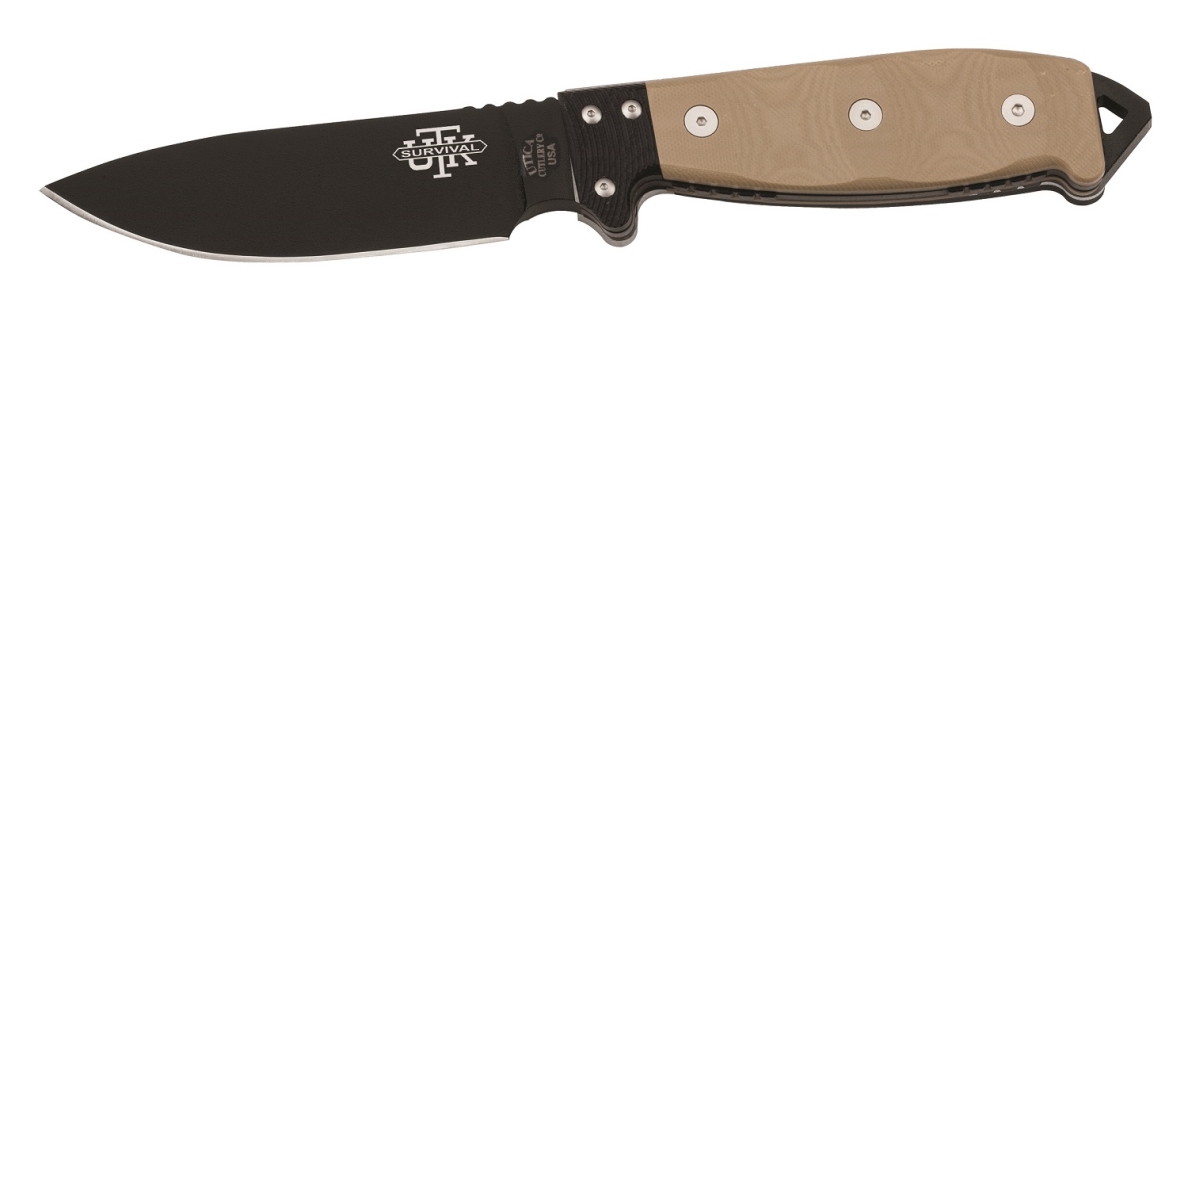 4017517 5.1 In. Utks5th Fixed Knife Blade With Tan Micarta Handle, Black